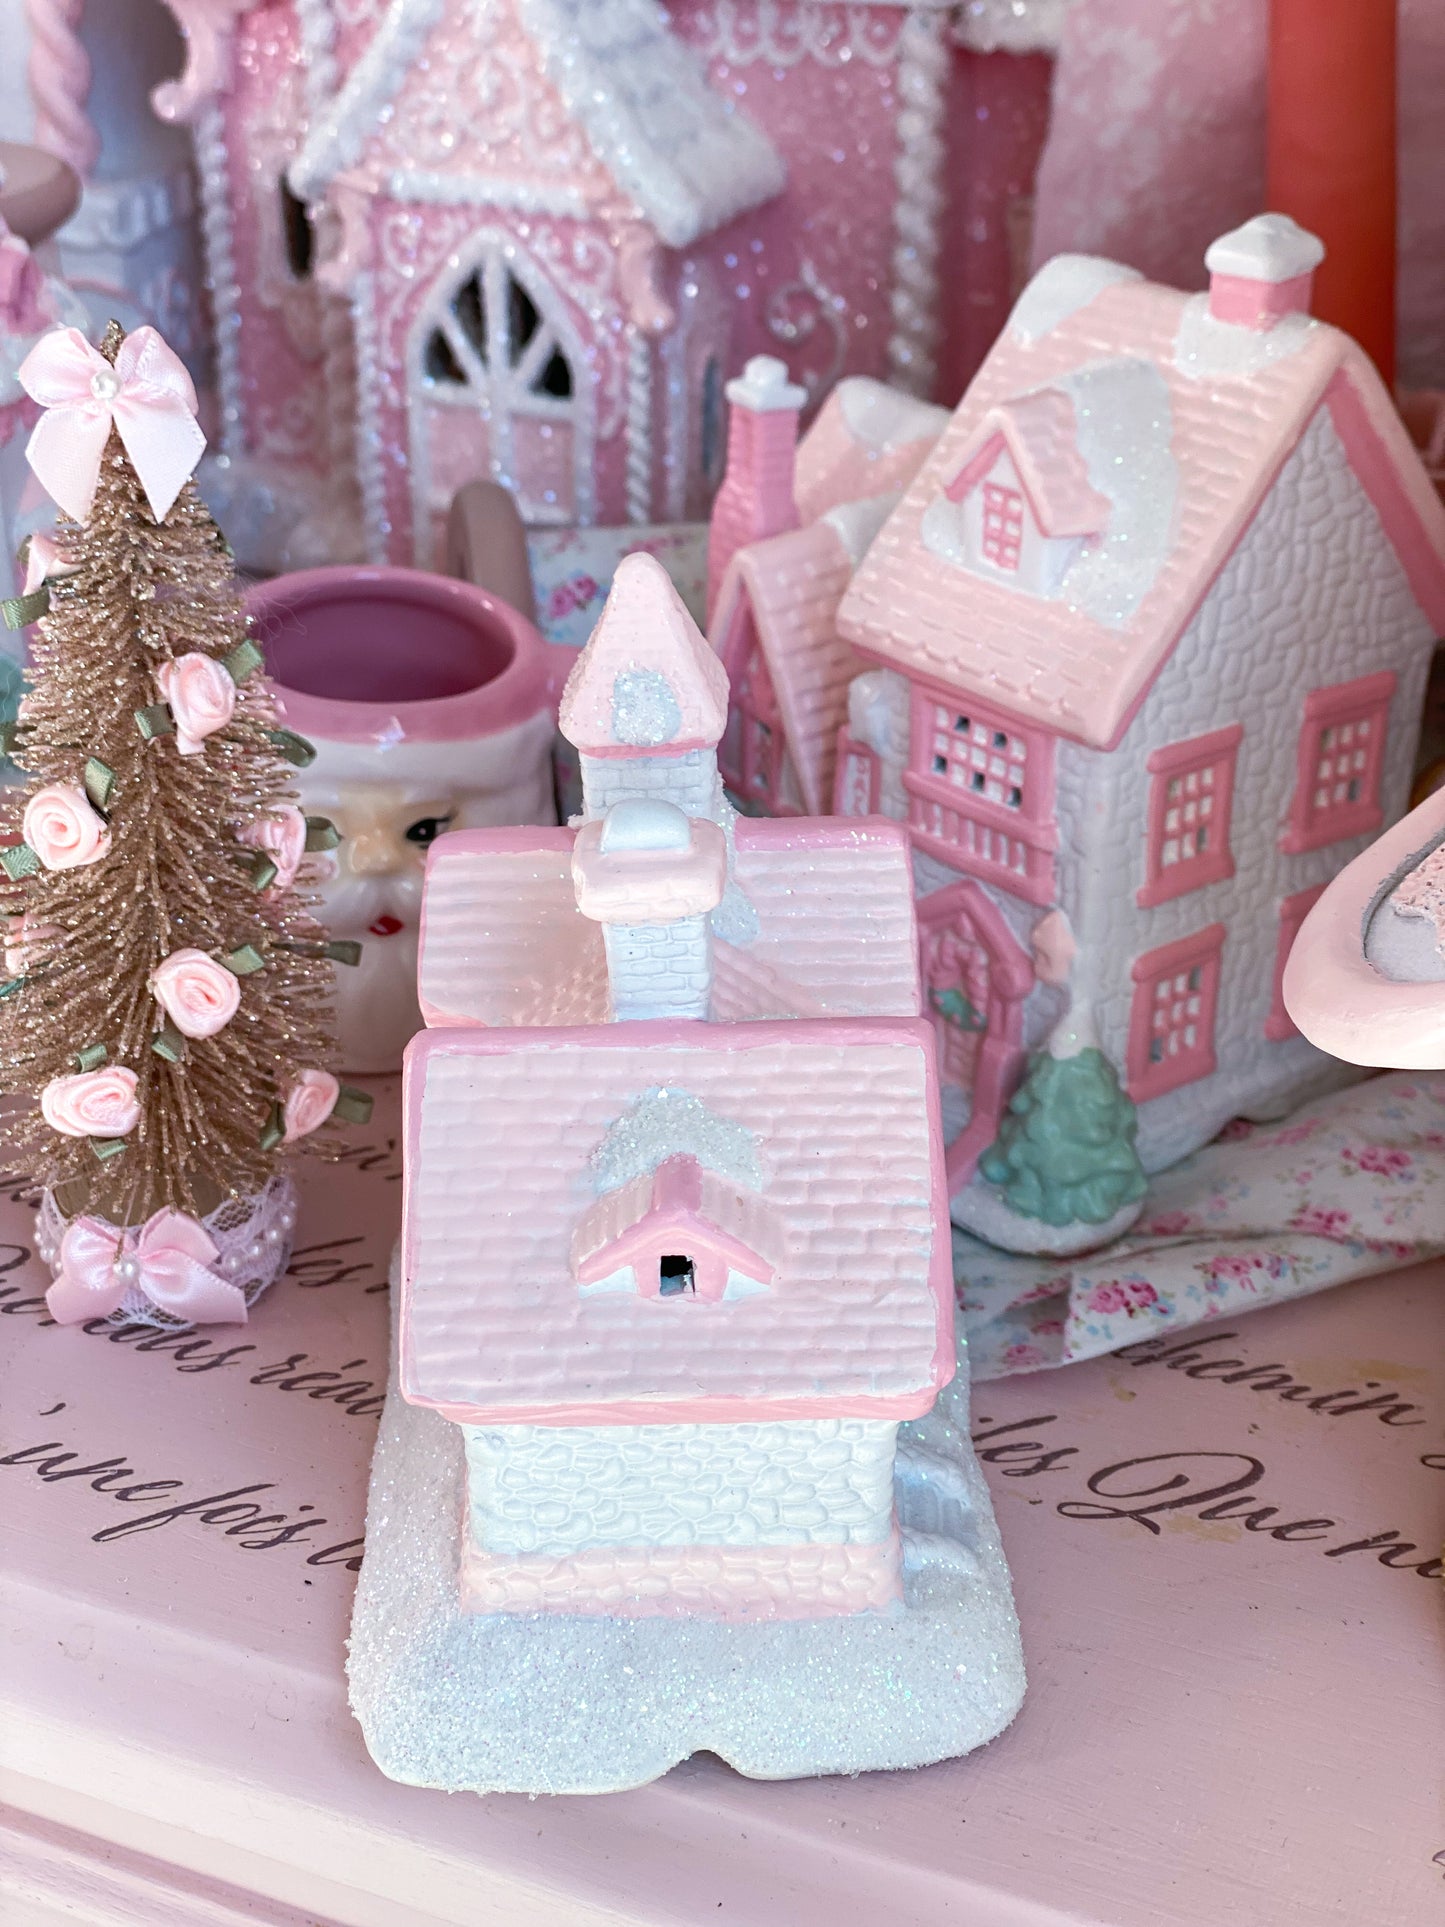 Bespoke Pastel Pink and White Petite Christmas Village Walpole Lodge PRE-ORDER